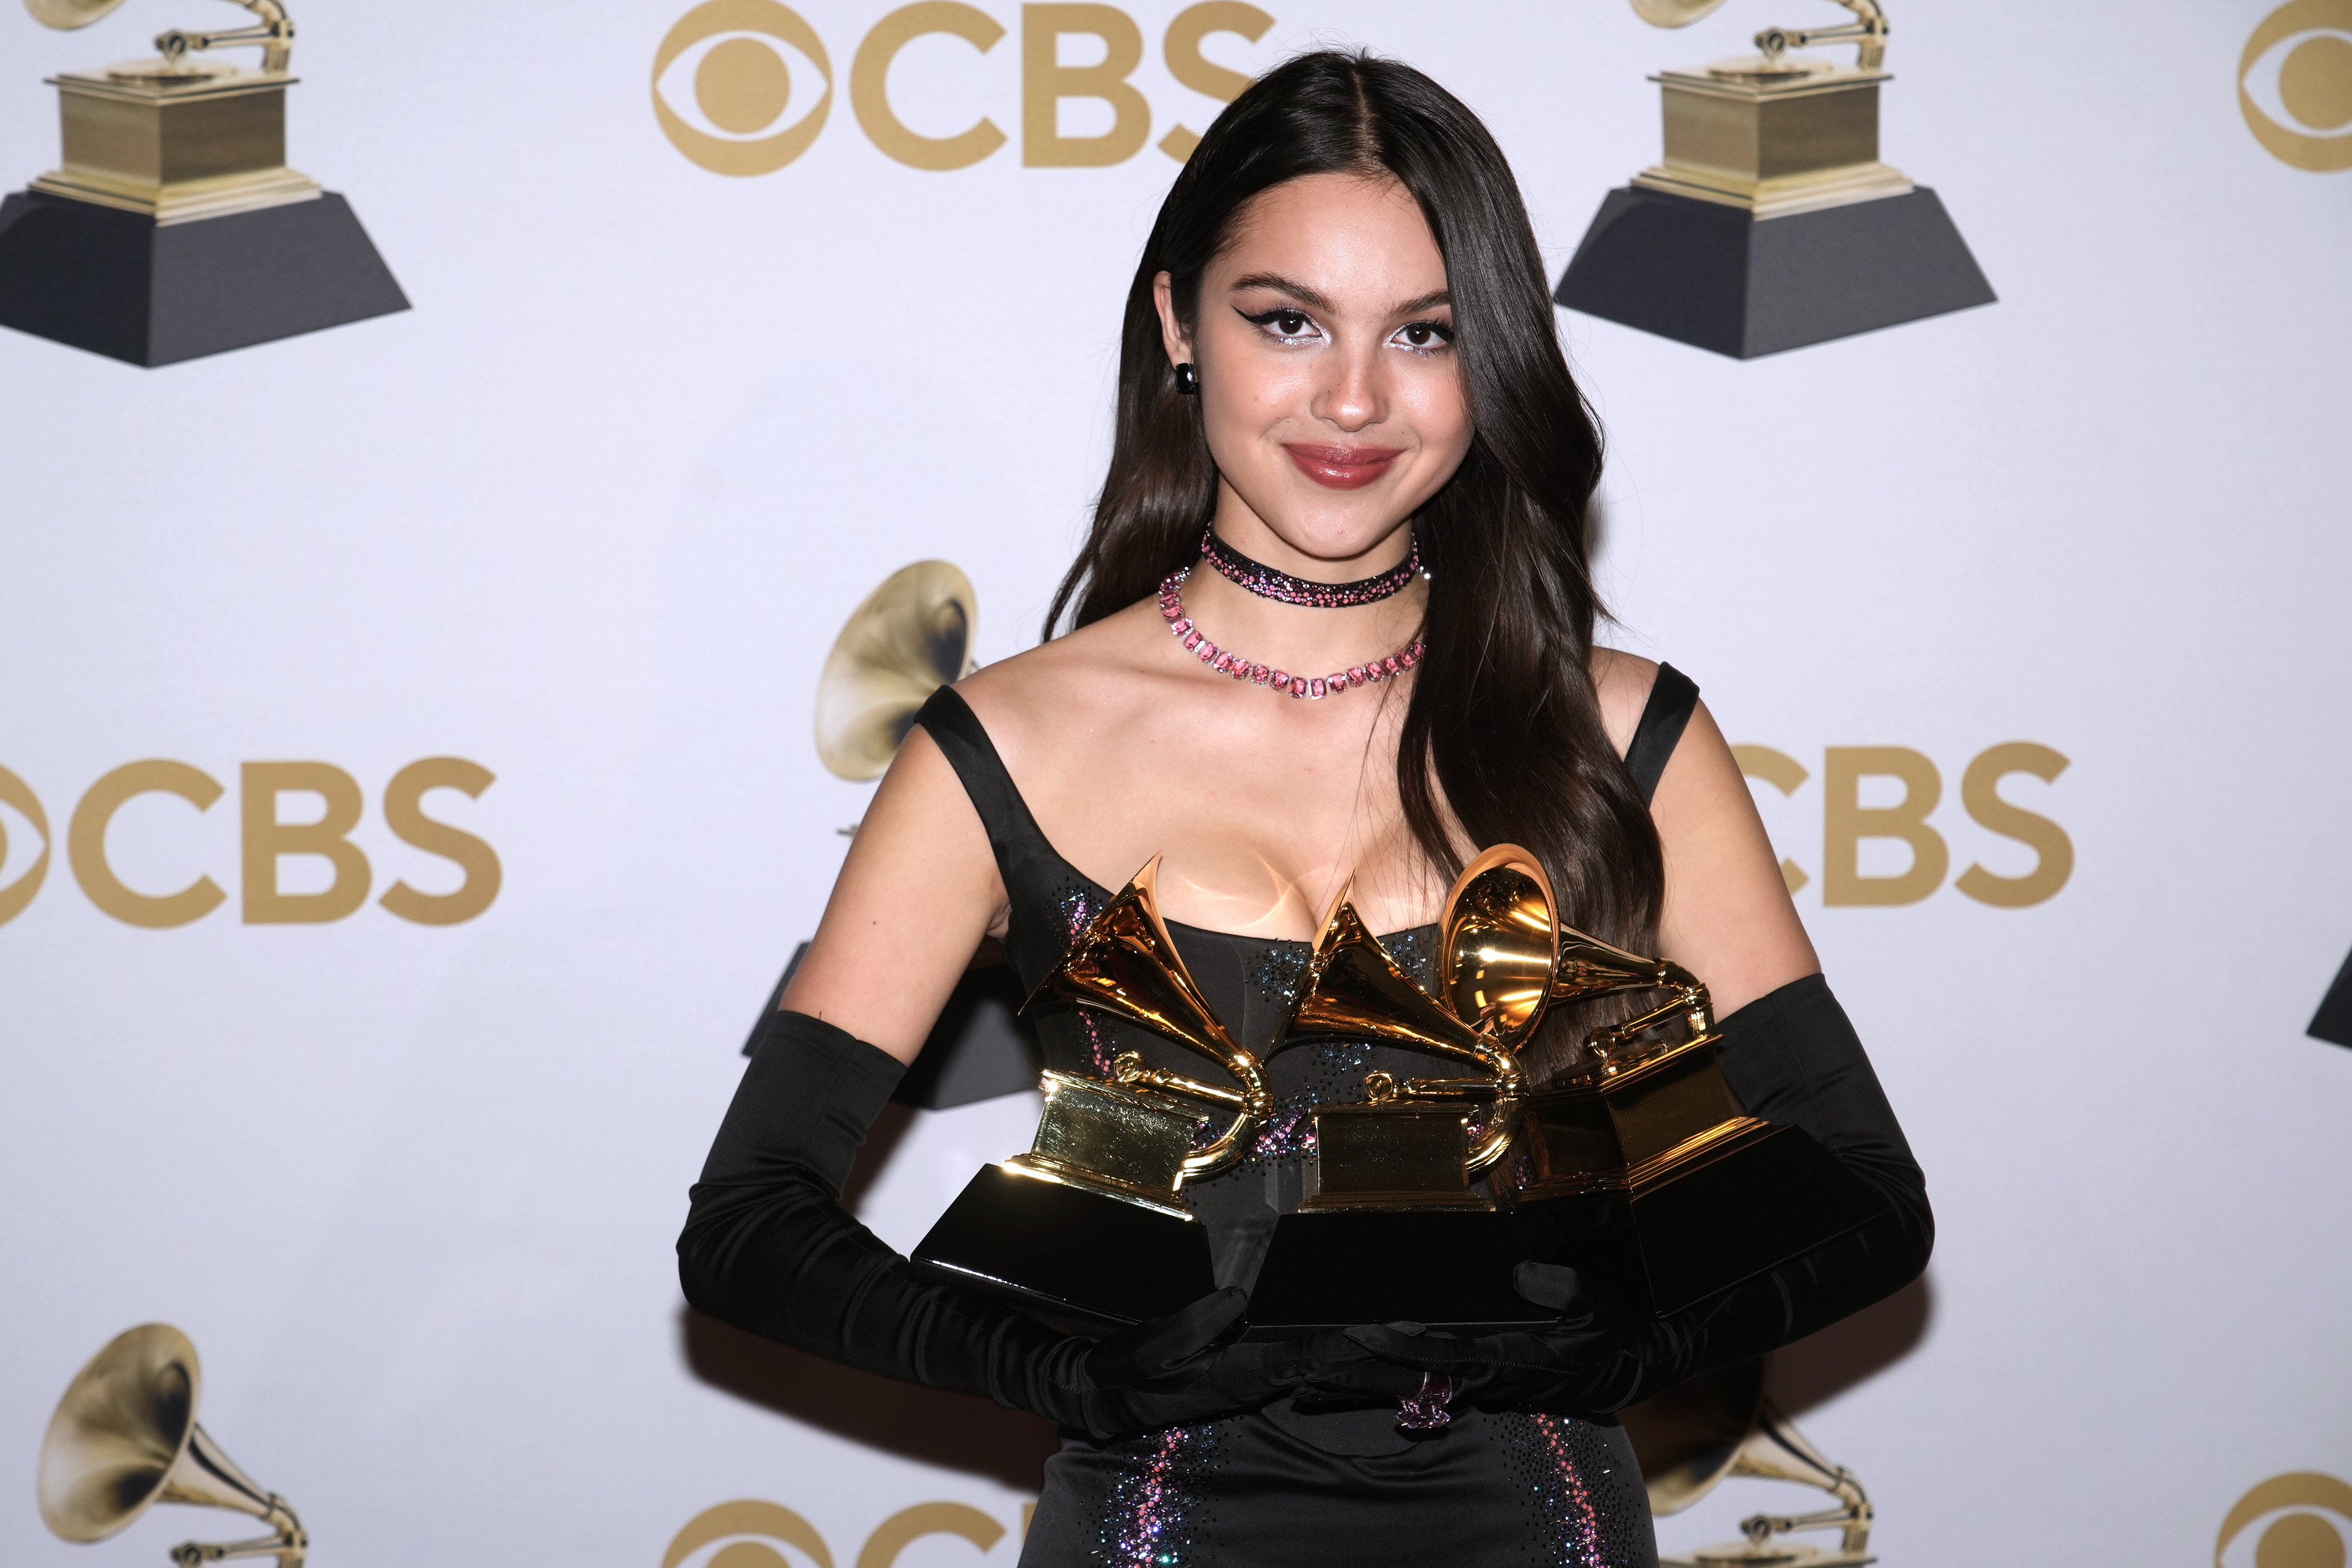 Olivia Rodrigo, a multi-Grammy Award-winner at 19, is sweet, not